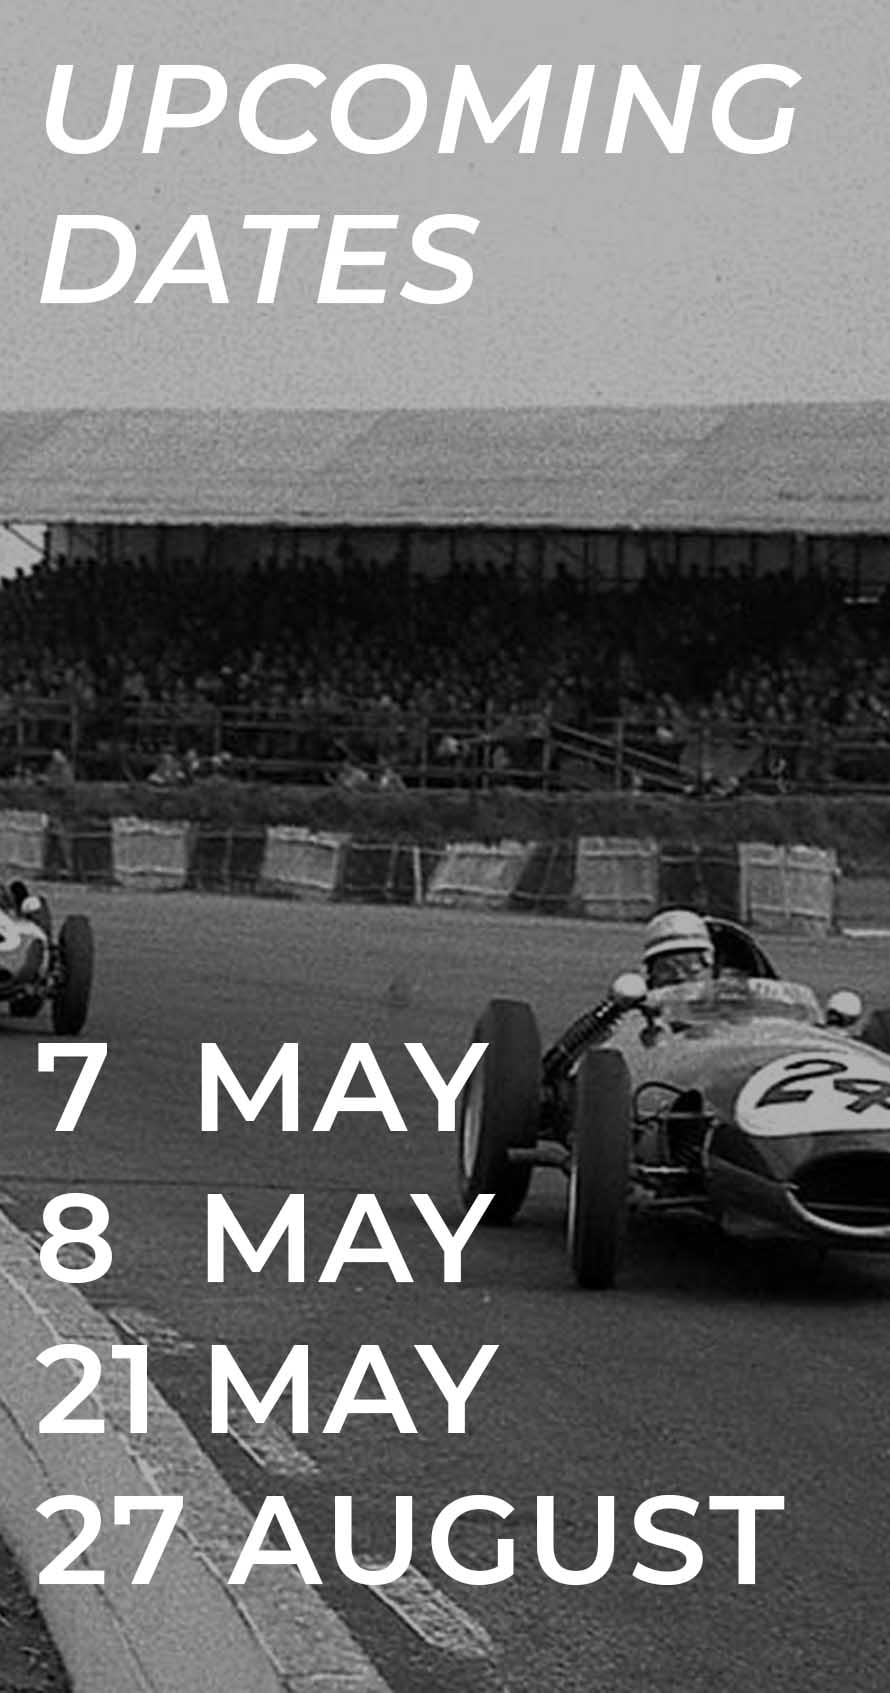 f1 experience classic racing school calendar